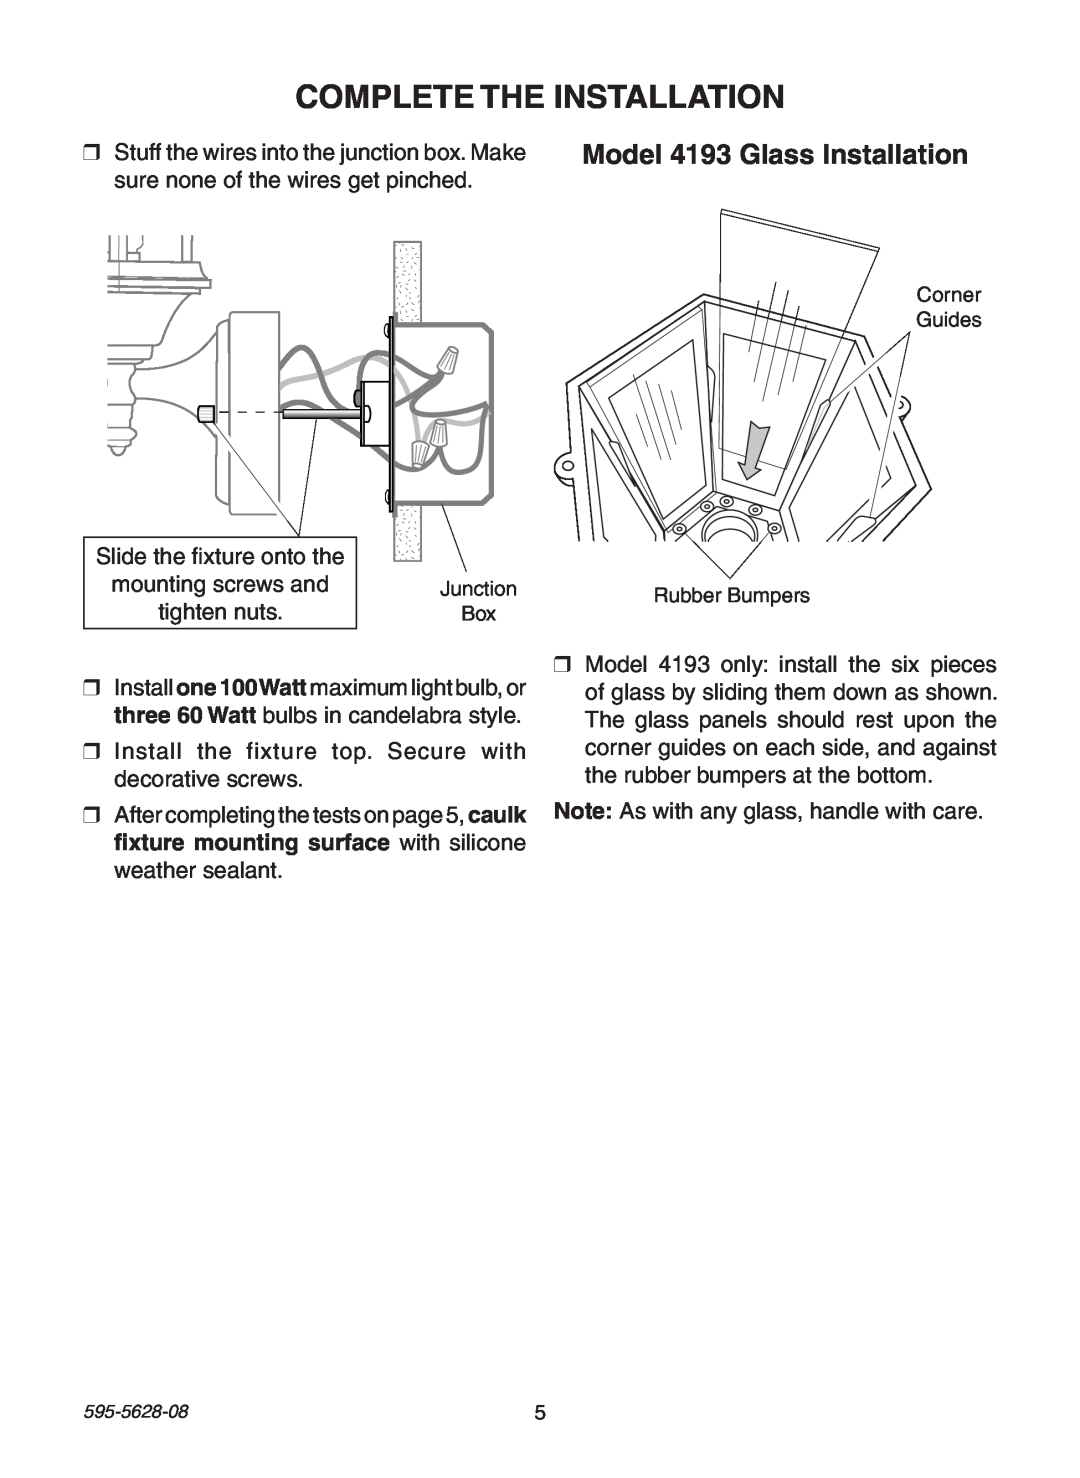 Heath Zenith SL-4190 Series manual Complete The Installation, Model 4193 Glass Installation 